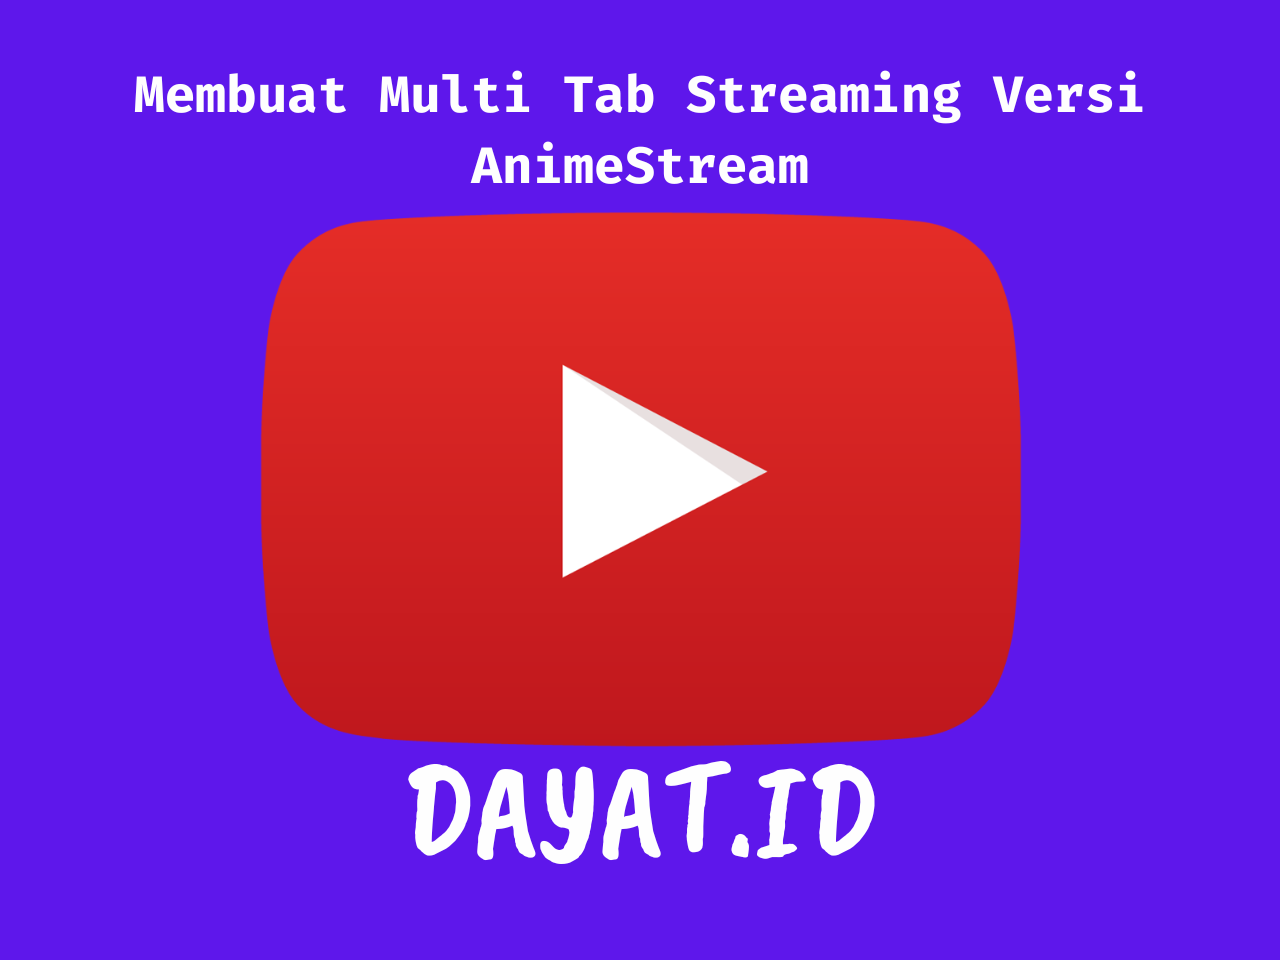 Membuat Multi Tab Streaming versi AnimeStream